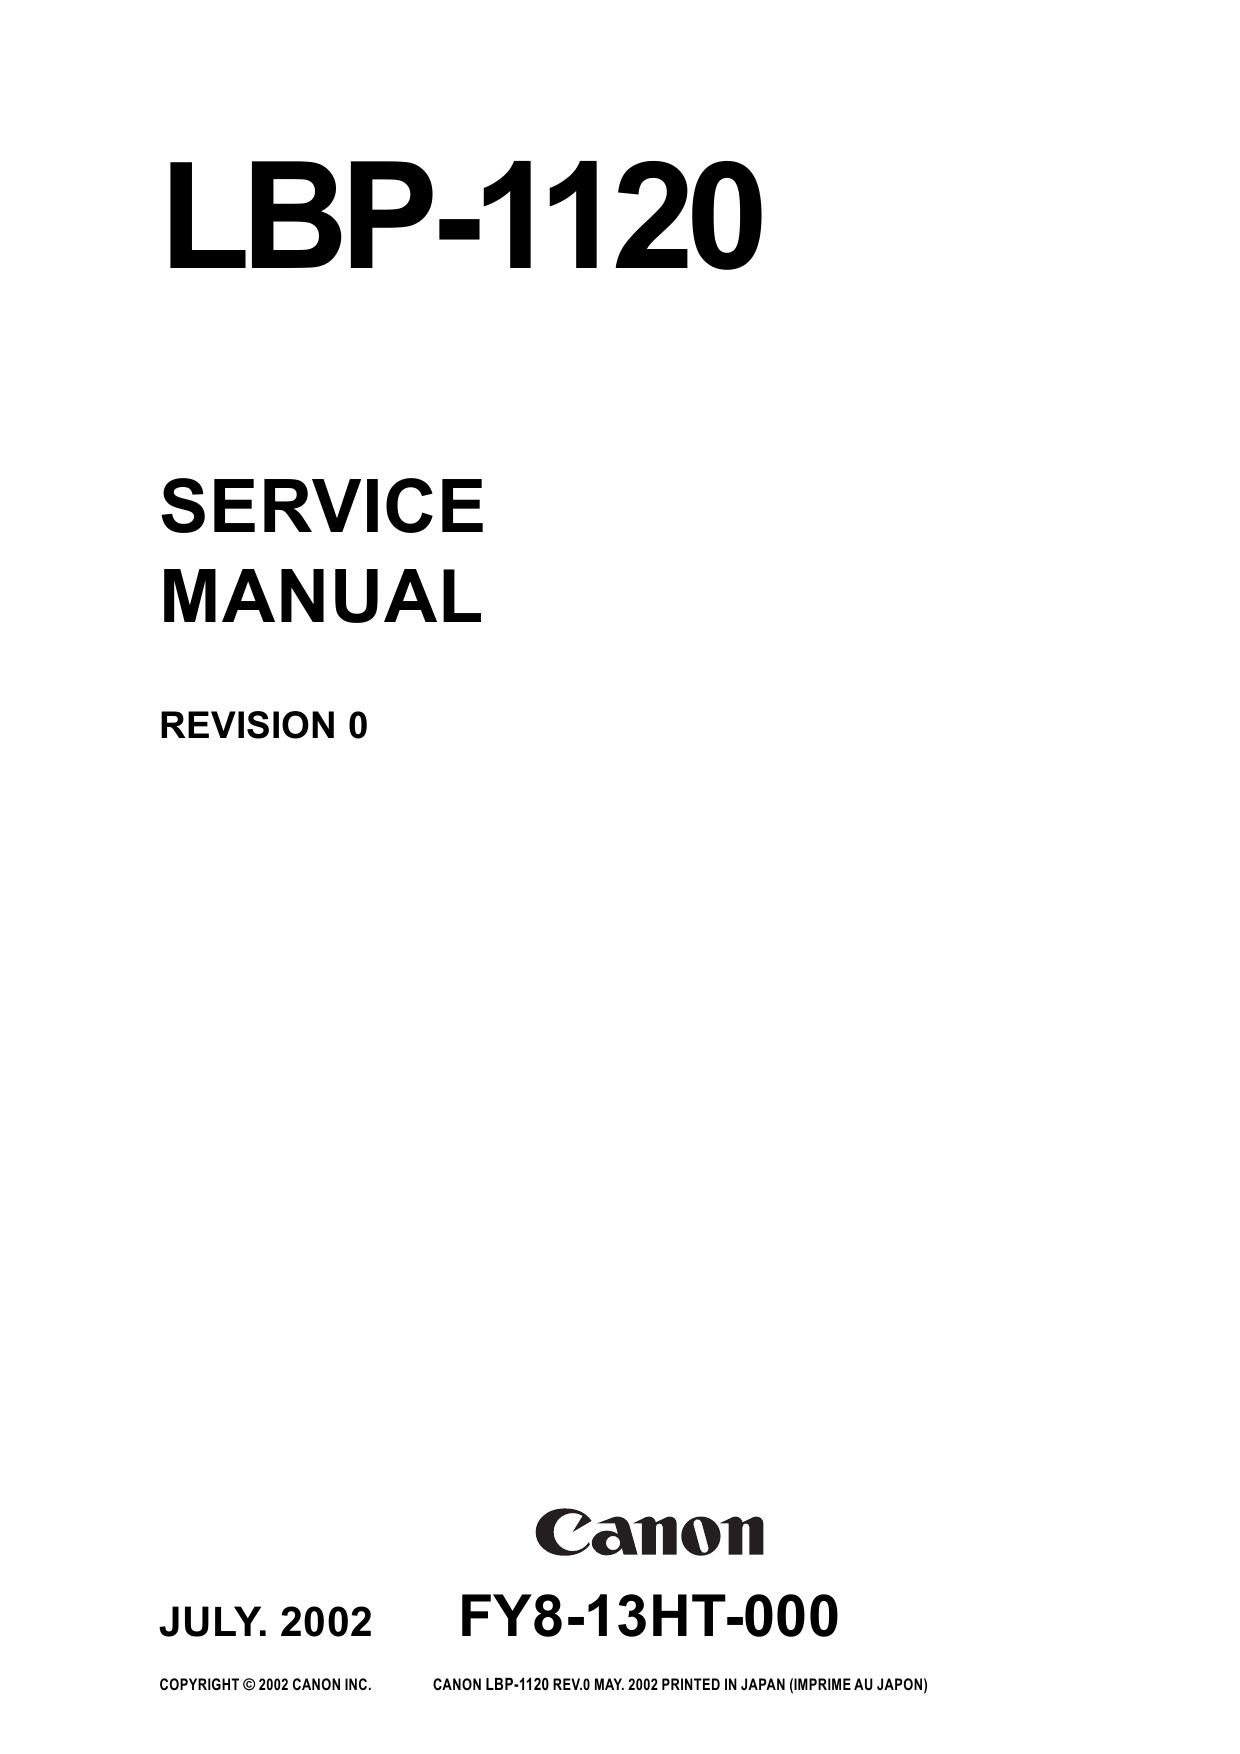 Canon imageCLASS LBP-1120 Service Manual-1